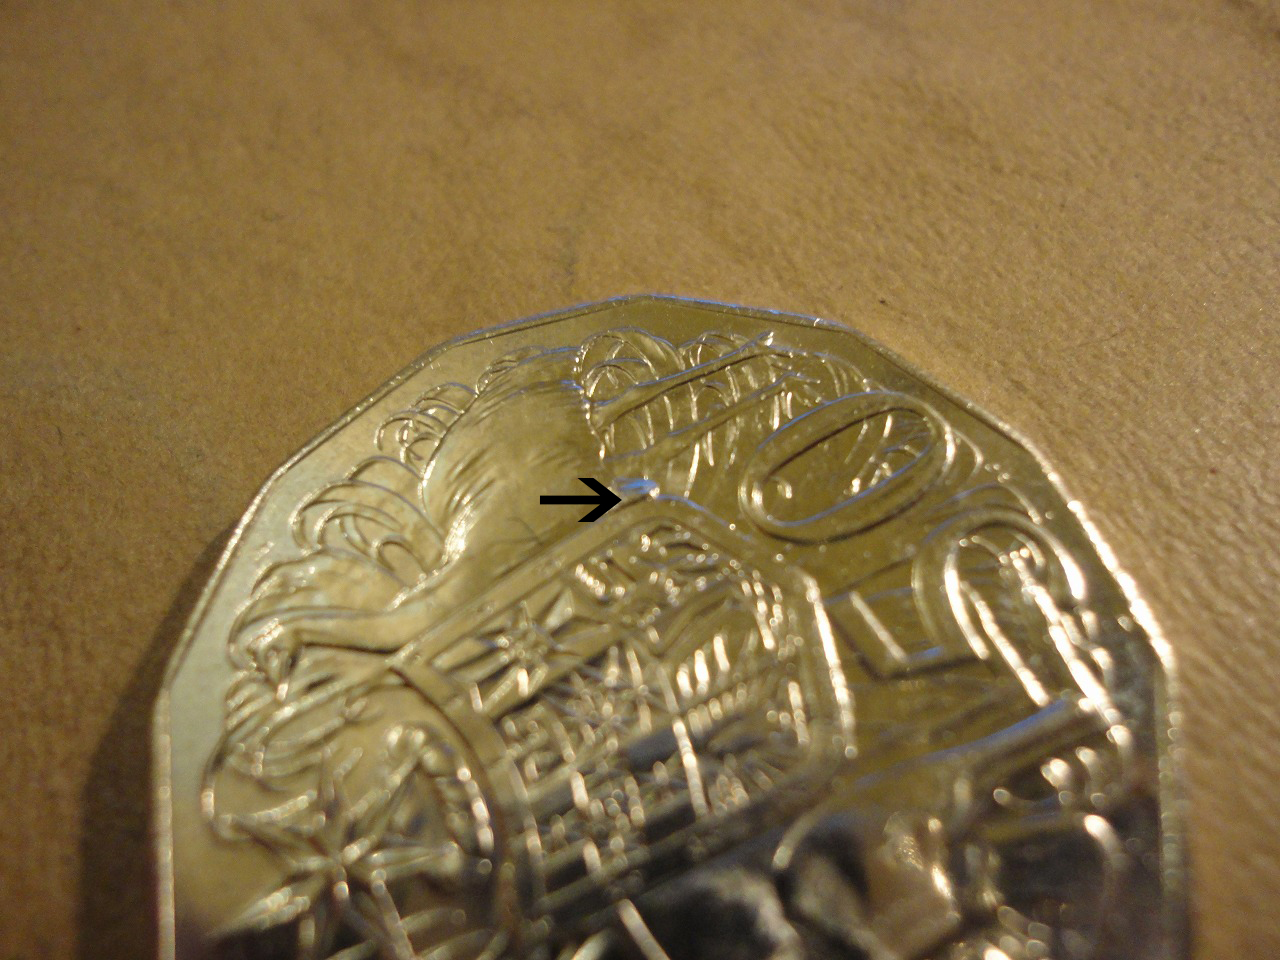 Australia Silver 2010 50 Cent Australia Coin Variety Discovered